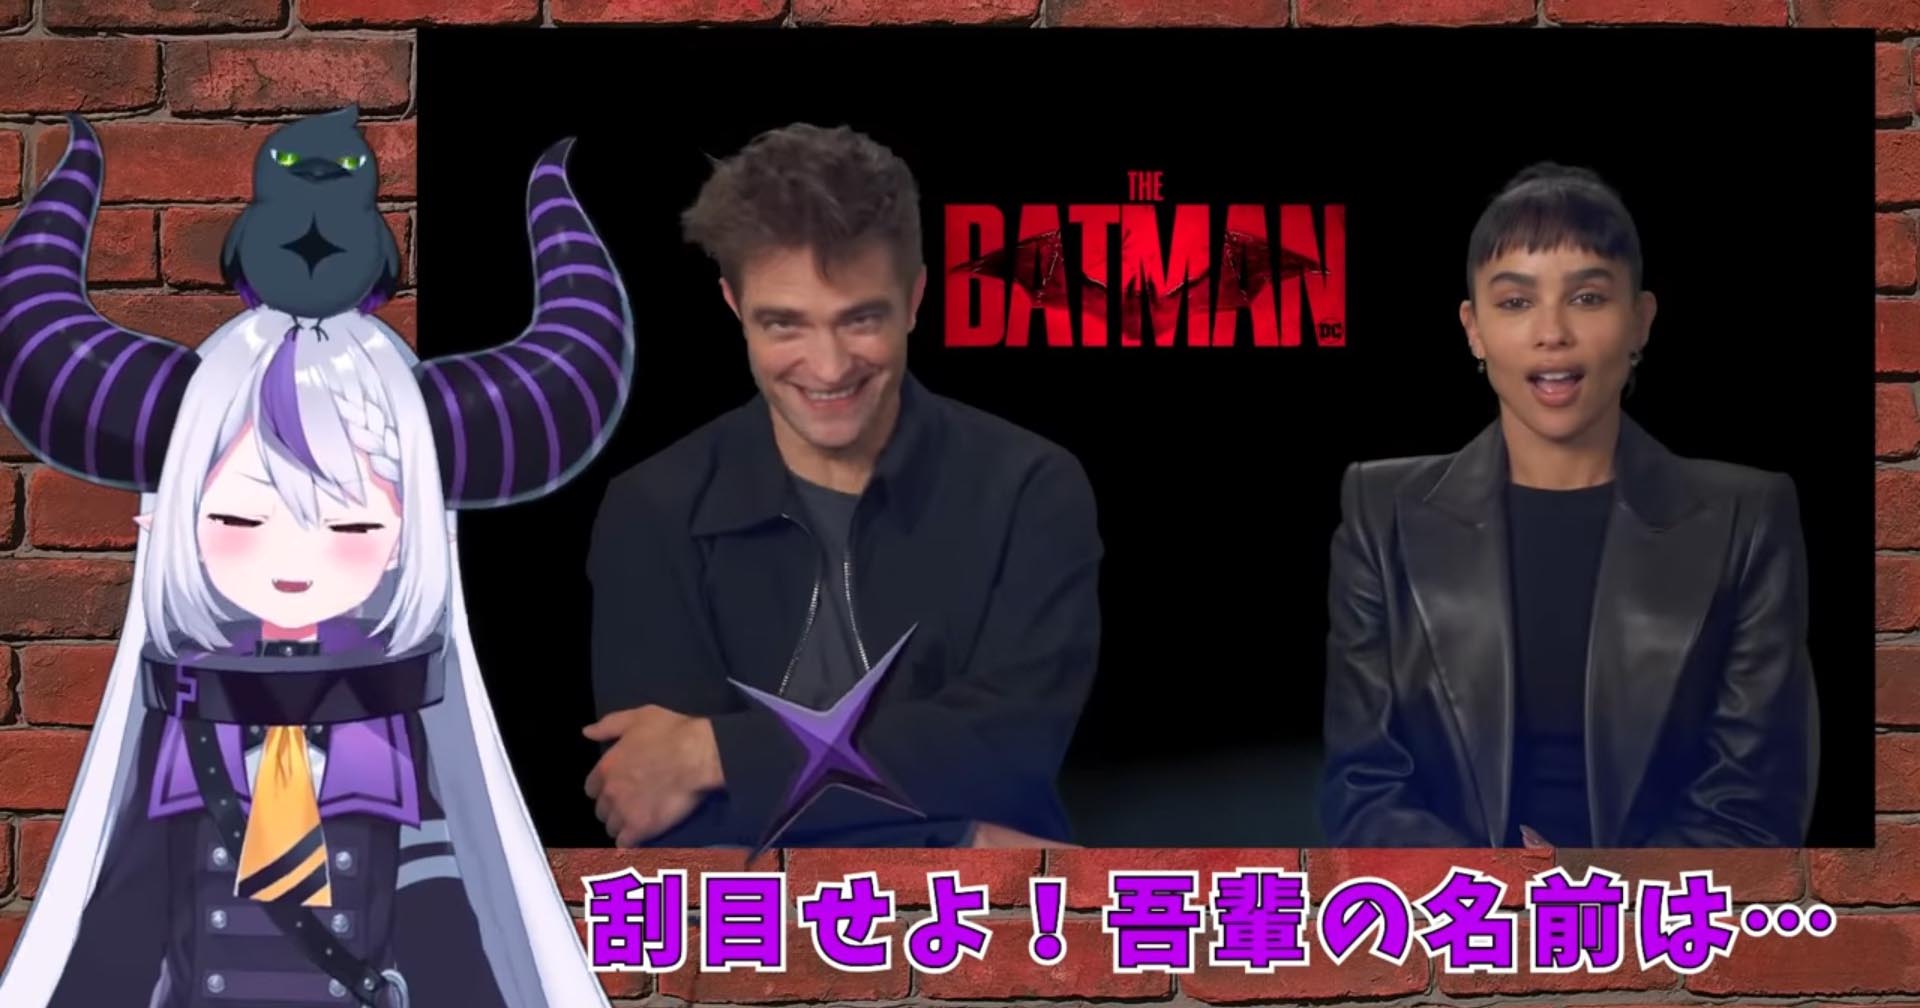 VTuber Interview With The Batman's Robert Pattinson and Zoe Kravitz